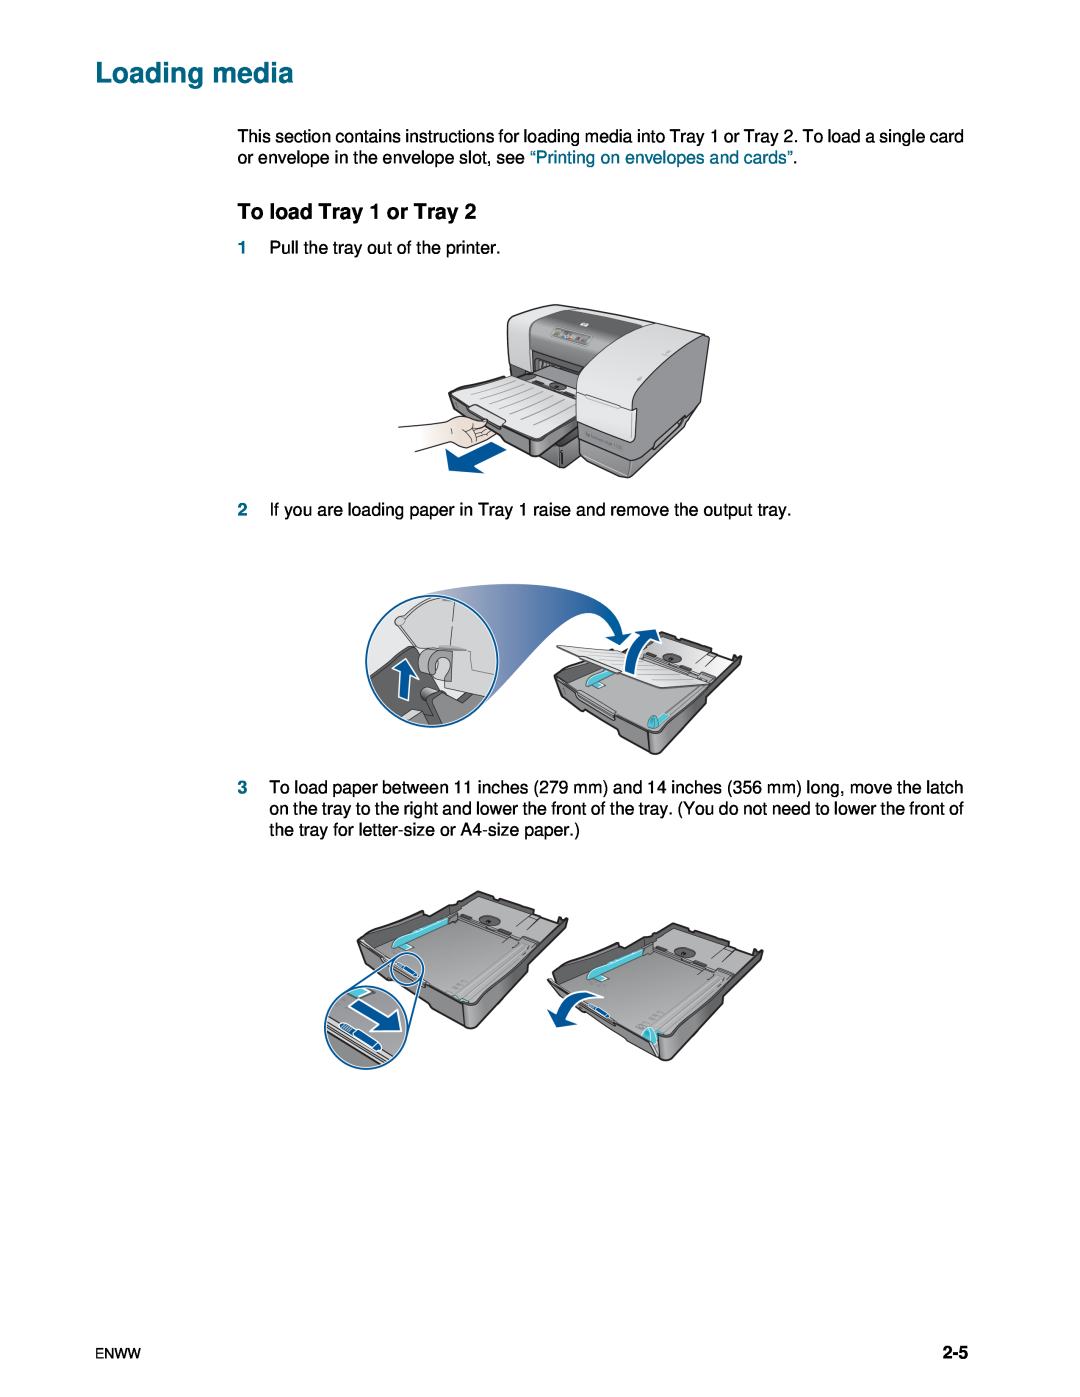 HP 1100dtn manual Loading media, To load Tray 1 or Tray 